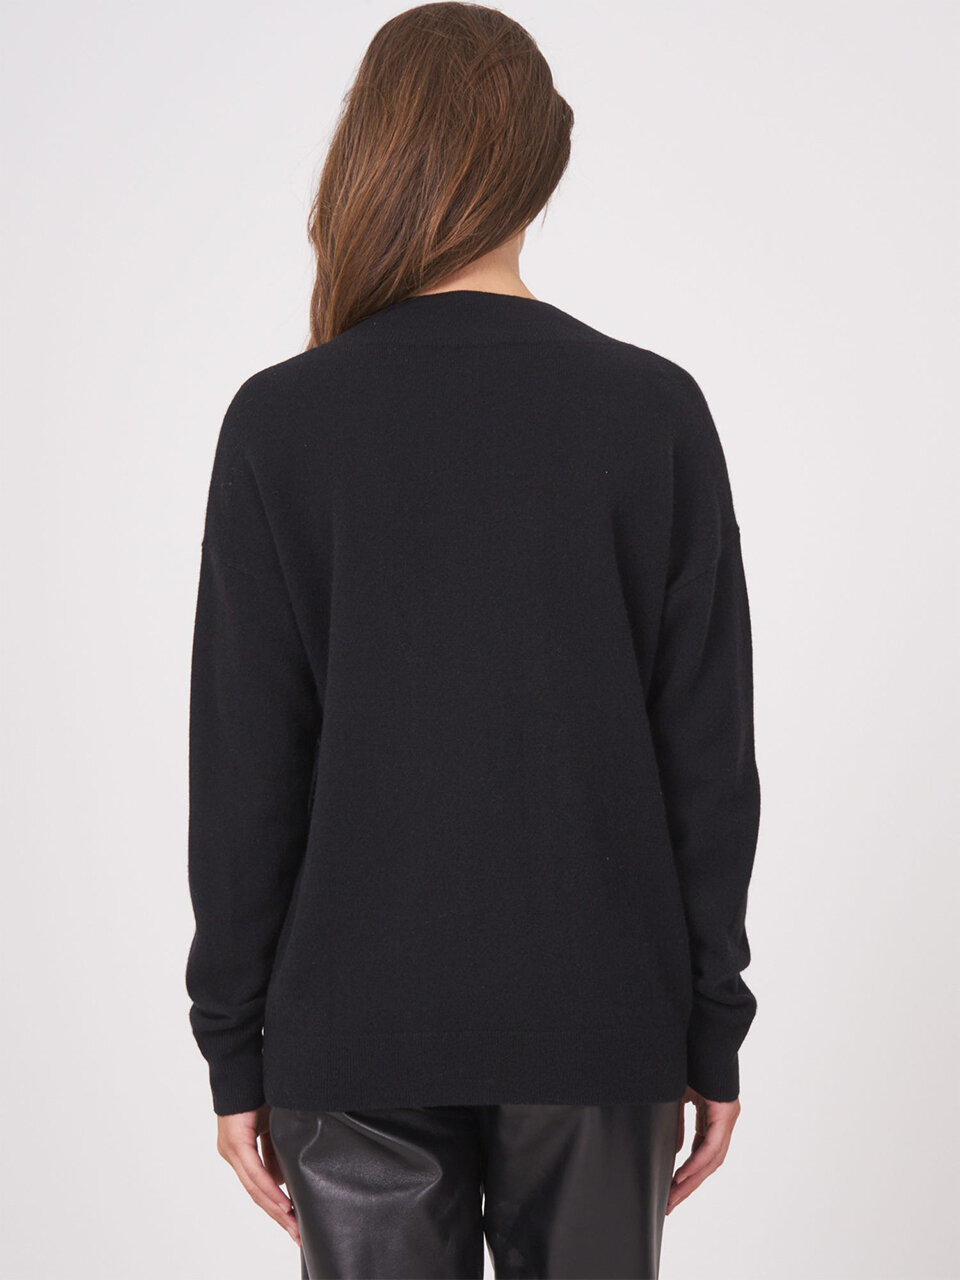 Repeat Cashmere - Basic Cashmere V-Neck Sweater